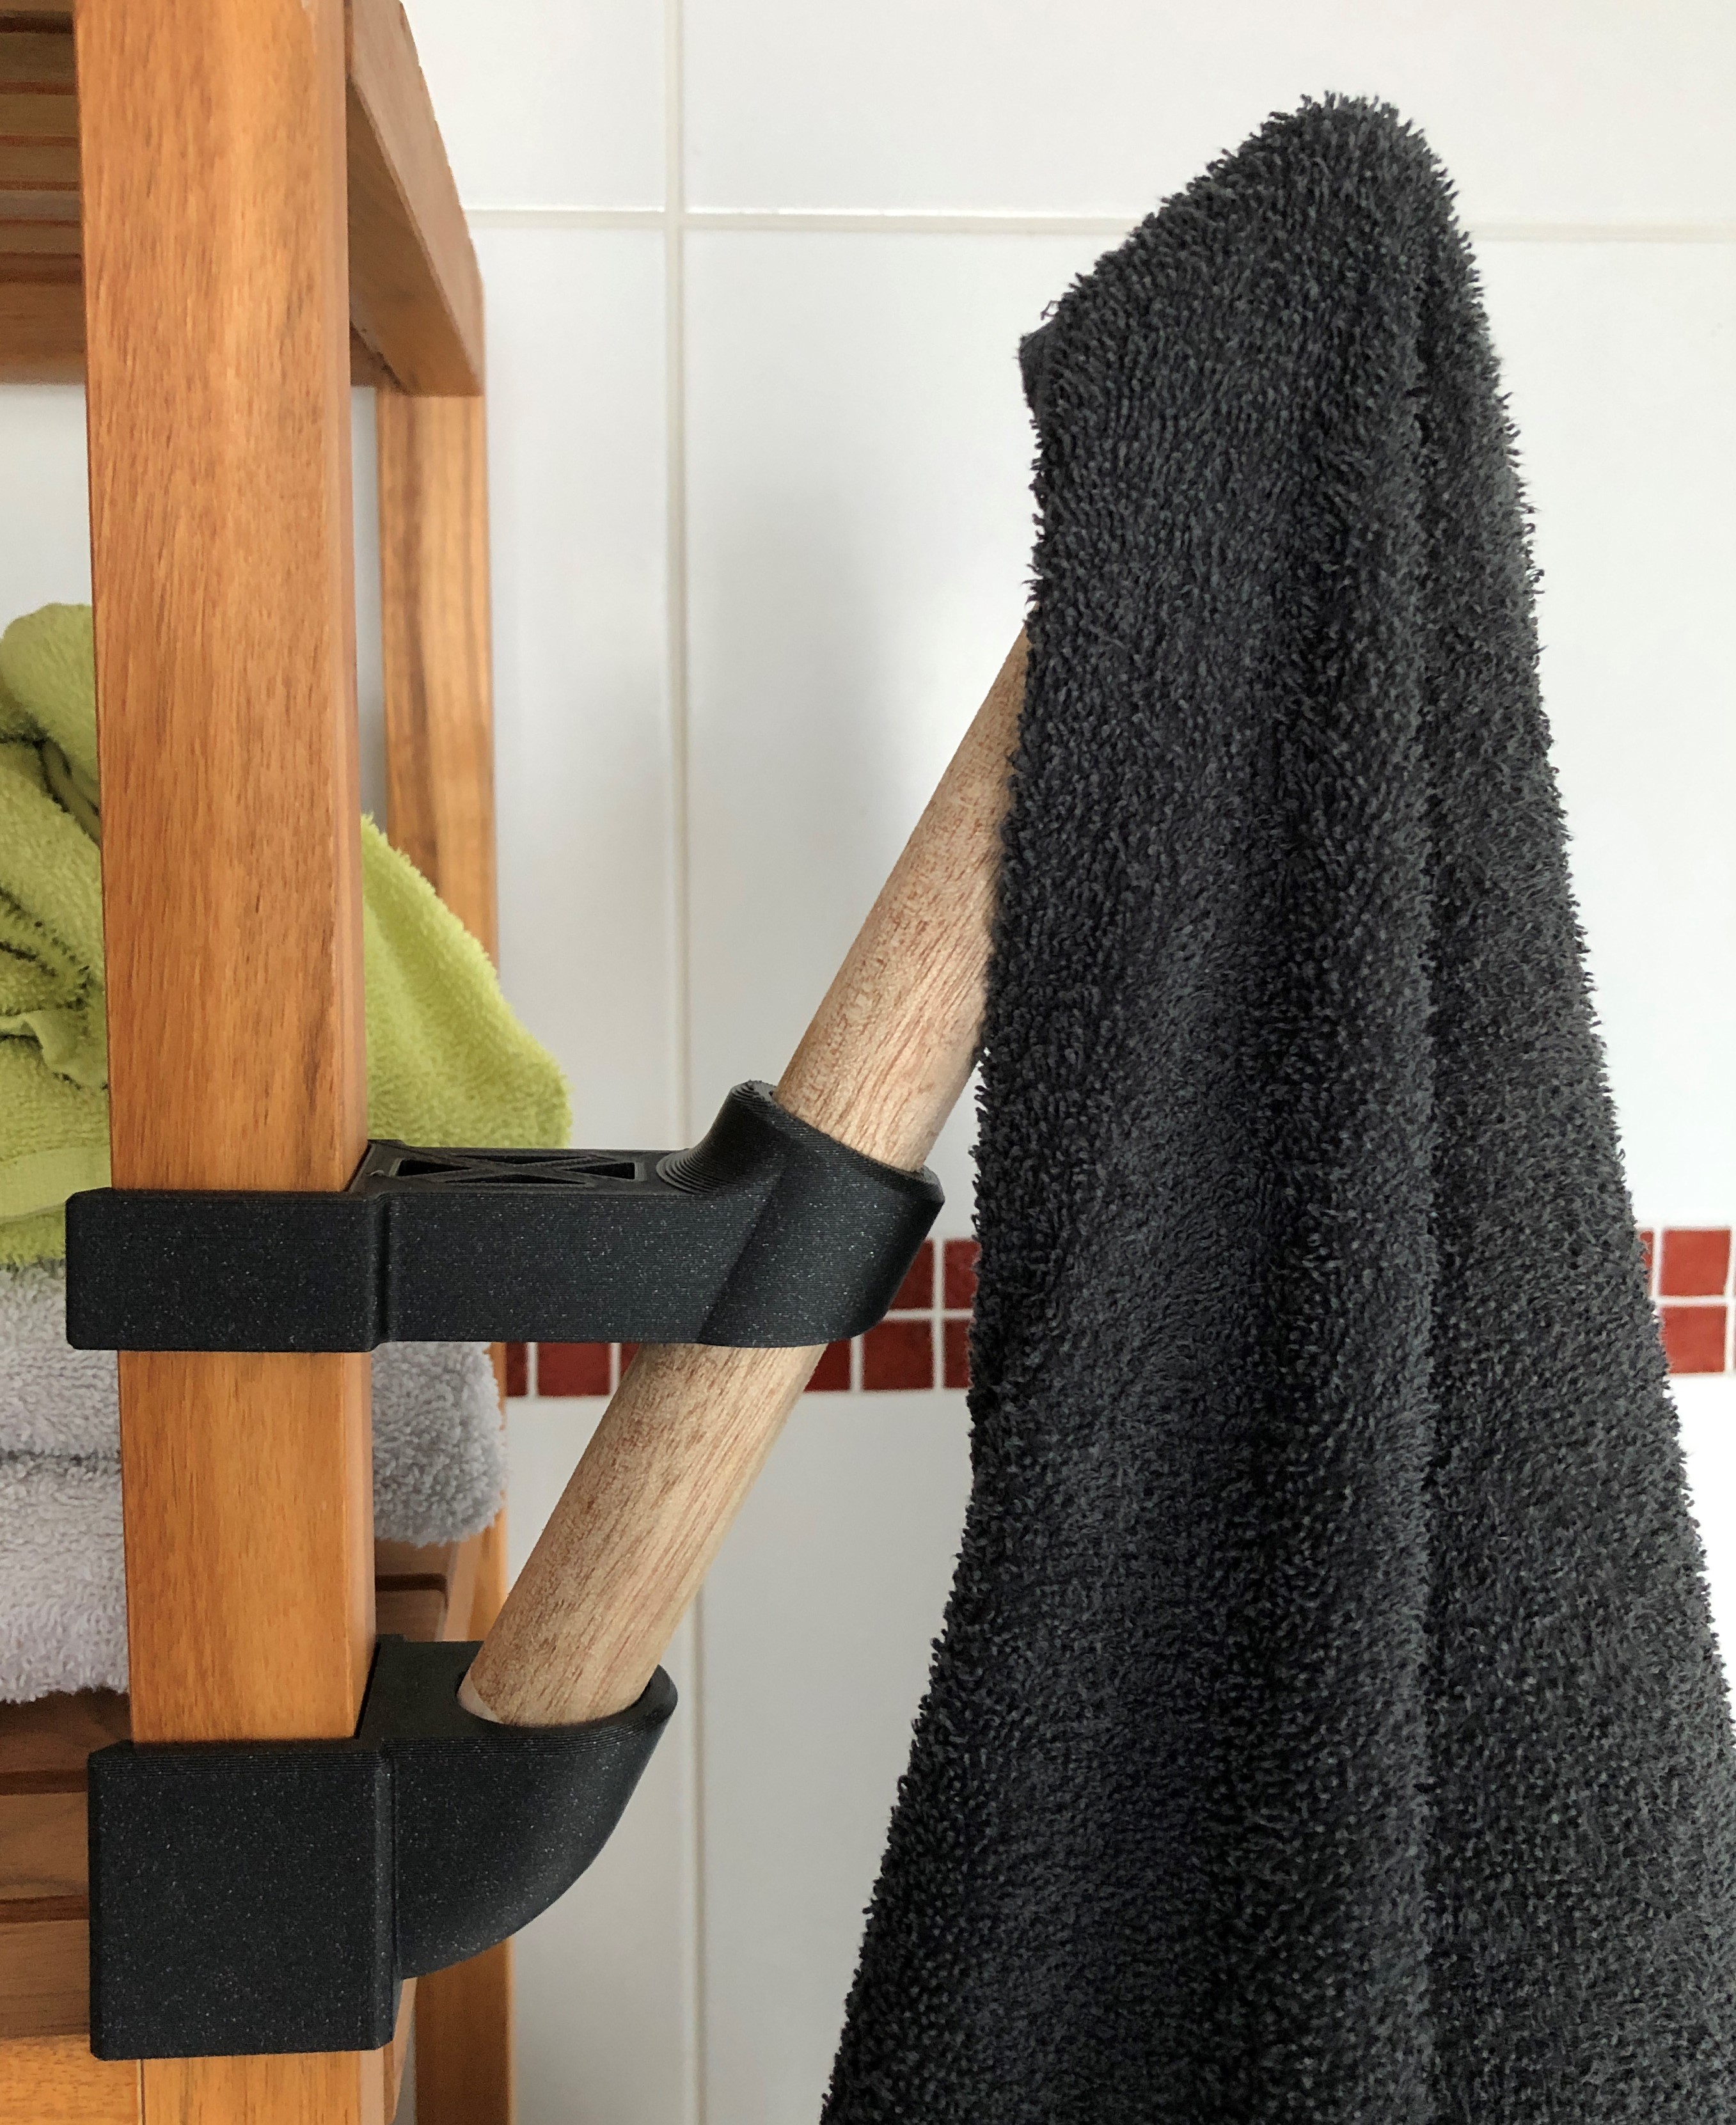 IKEA Molger - clip on towel hanger